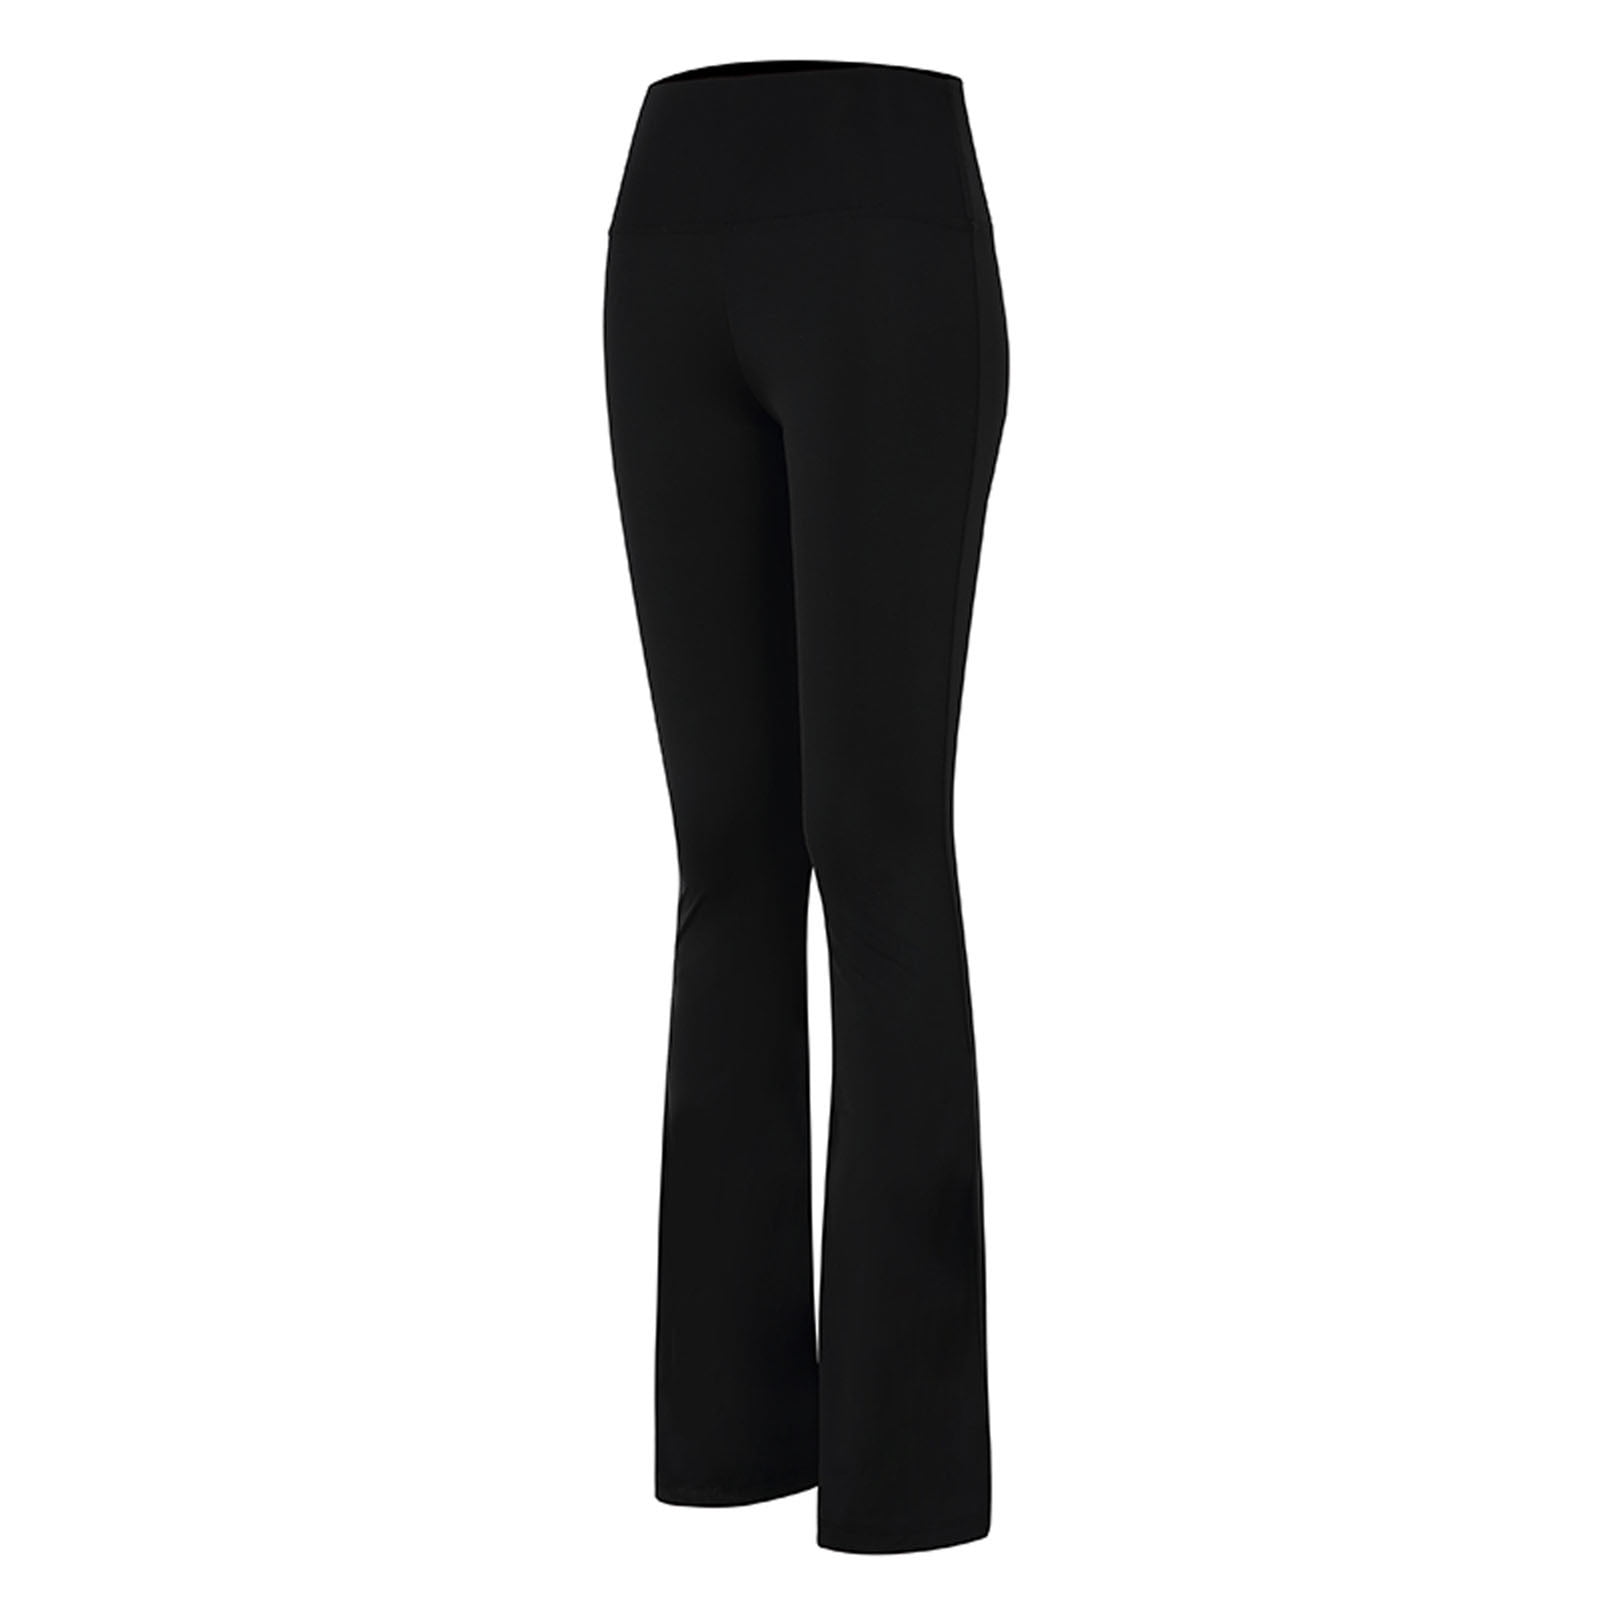 JNGSA Flare Leggings Pants For Women Women's Casual Slim High Elastic Waist  Solid Color Sports Yoga Flare Pants 